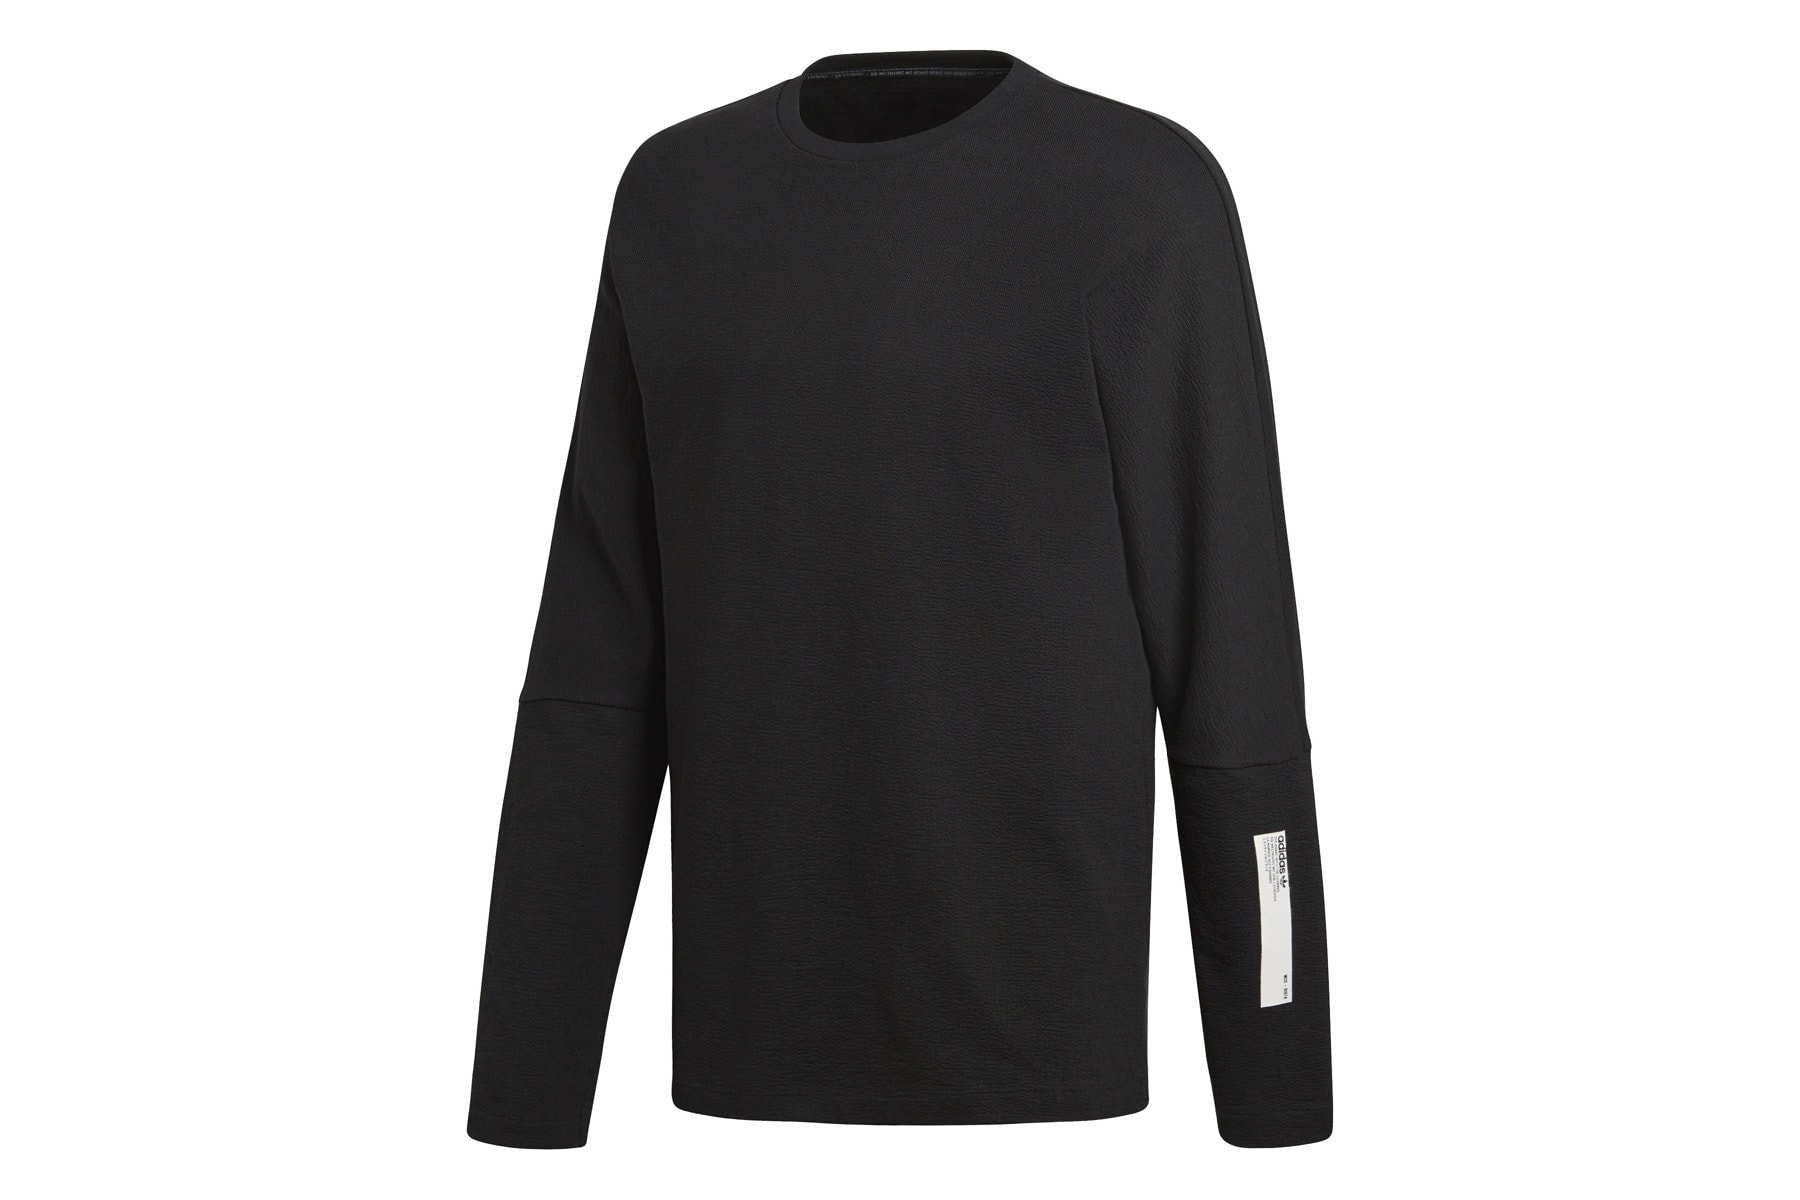 adidas Originals NMD Spring Summer 2018 Apparel Jacket Sweater T-shirt Vest Bags